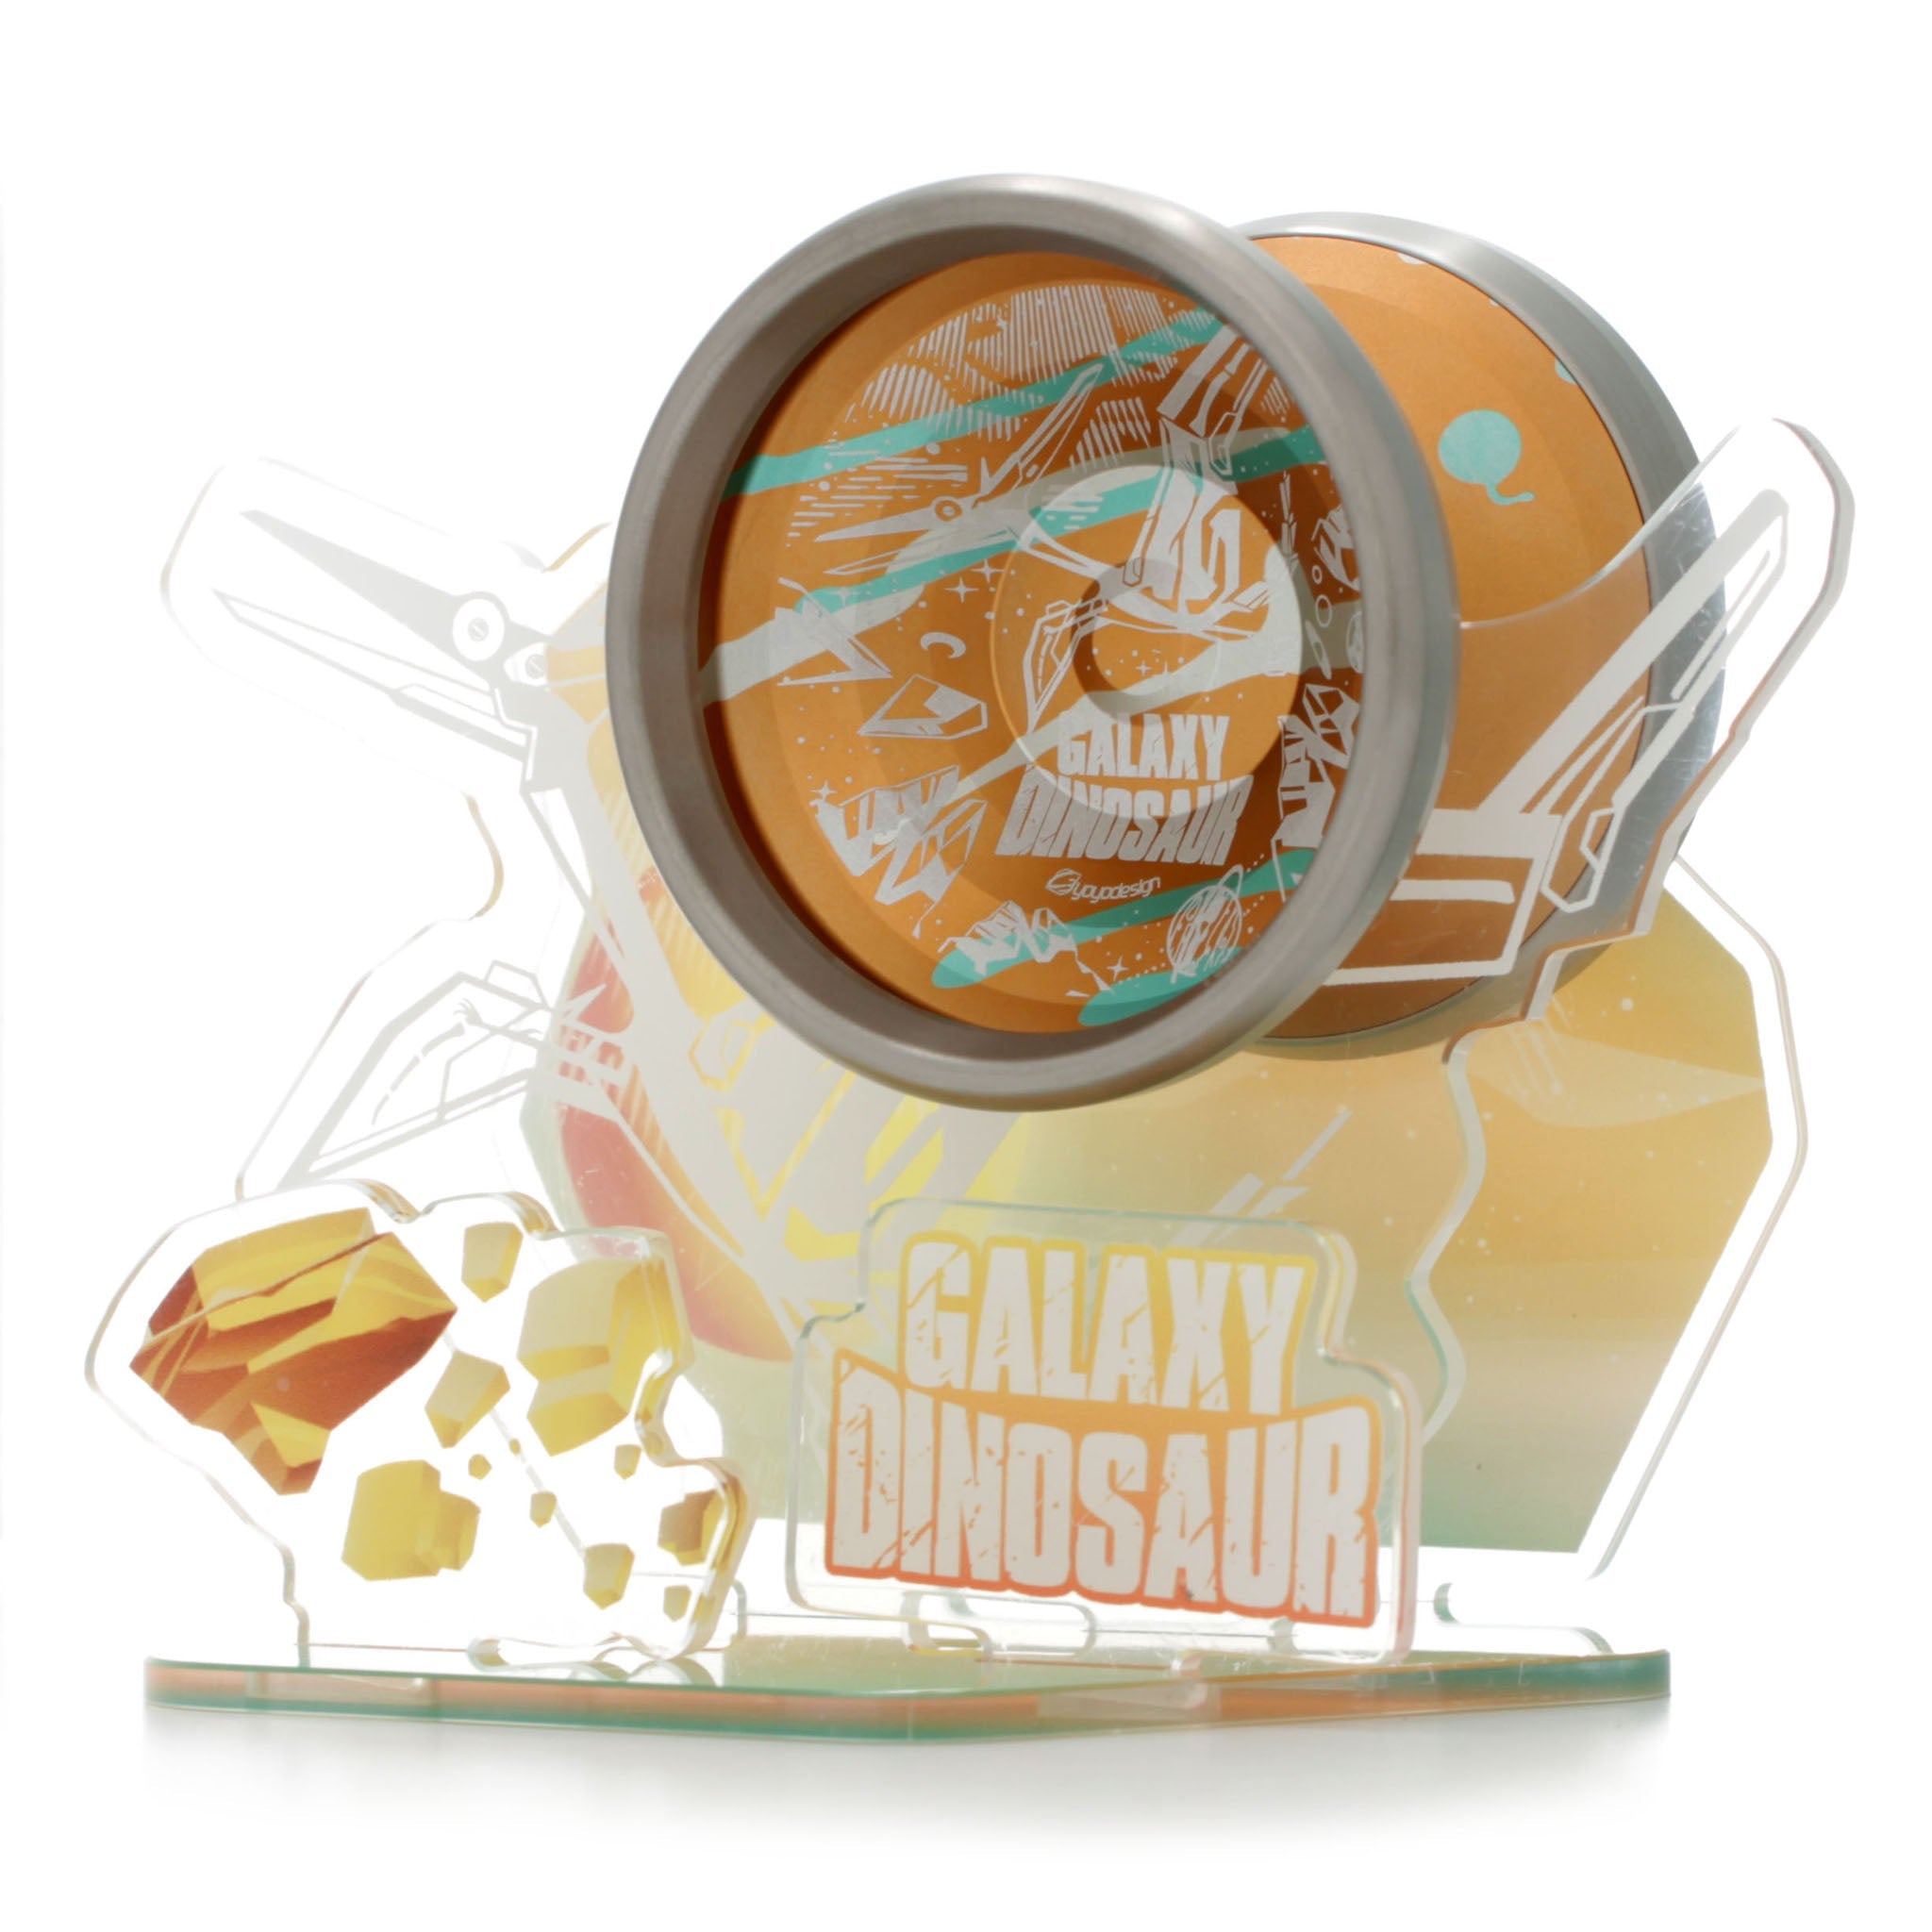 Galaxy Dinosaur - C3yoyodesign / YO-YO STORE REWIND WORLDWIDE